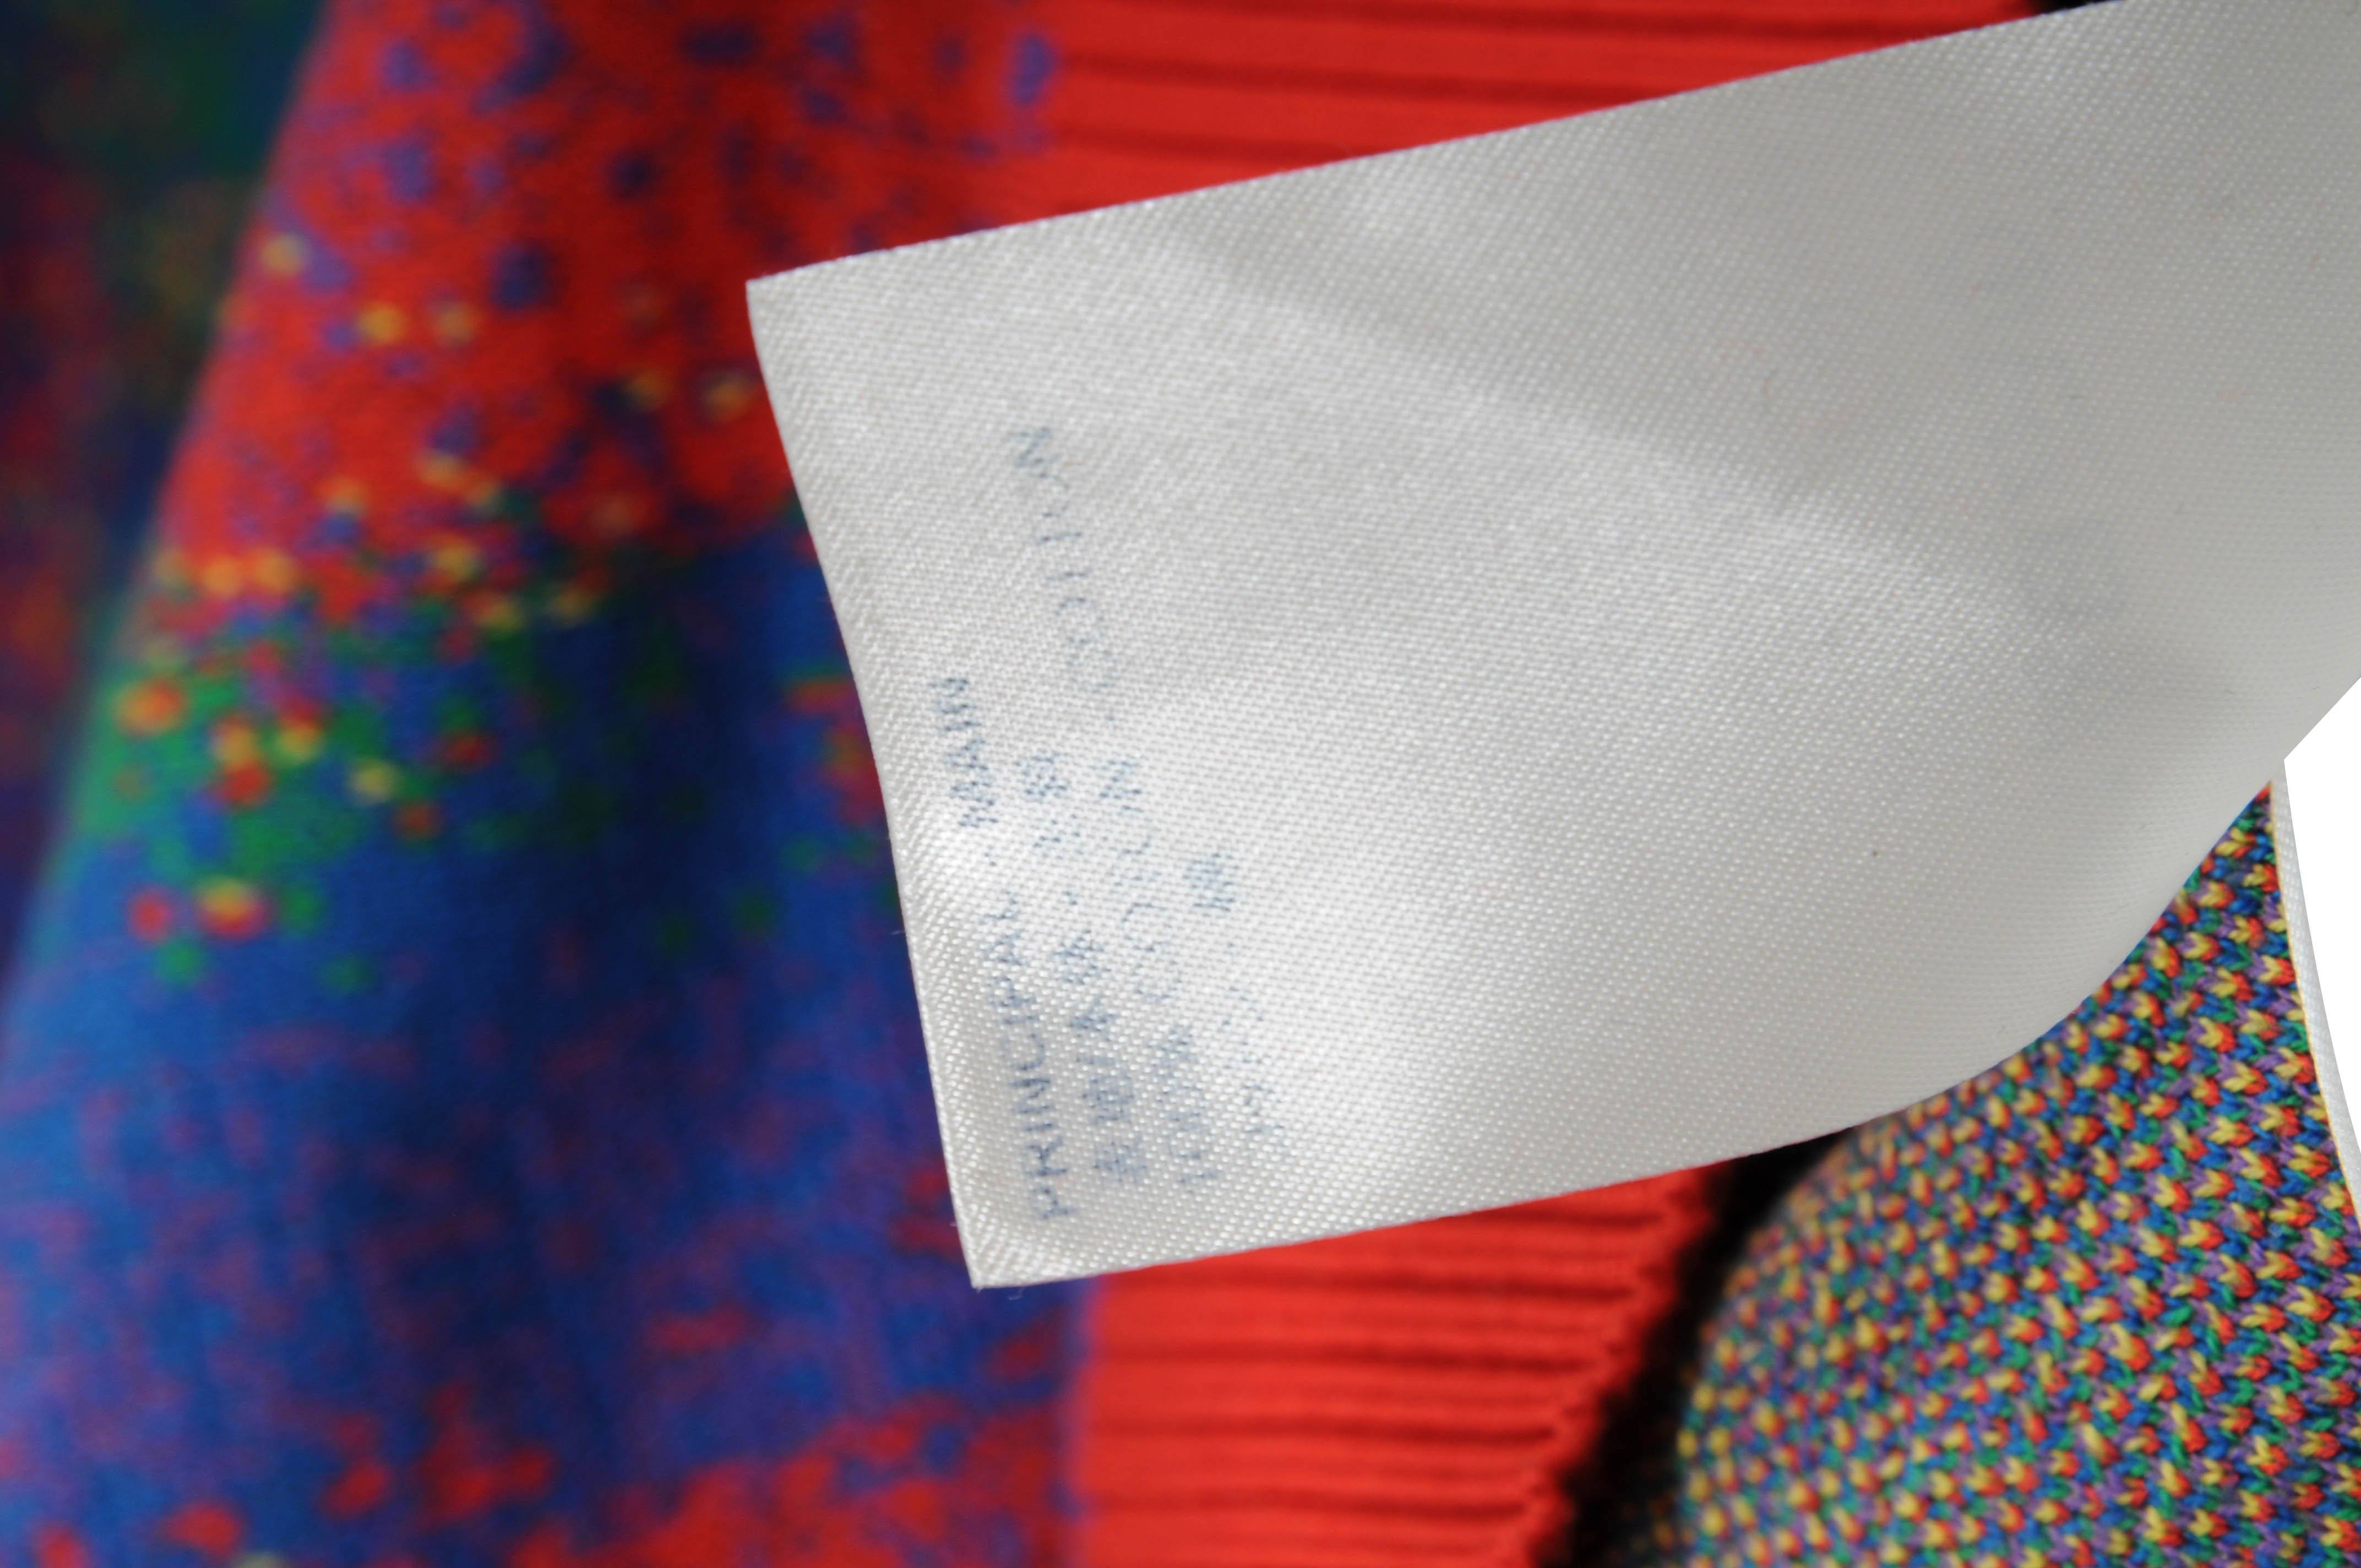 Louis Vuitton Multicolor Monogram Jacquard Pullover Grey. Size Xs